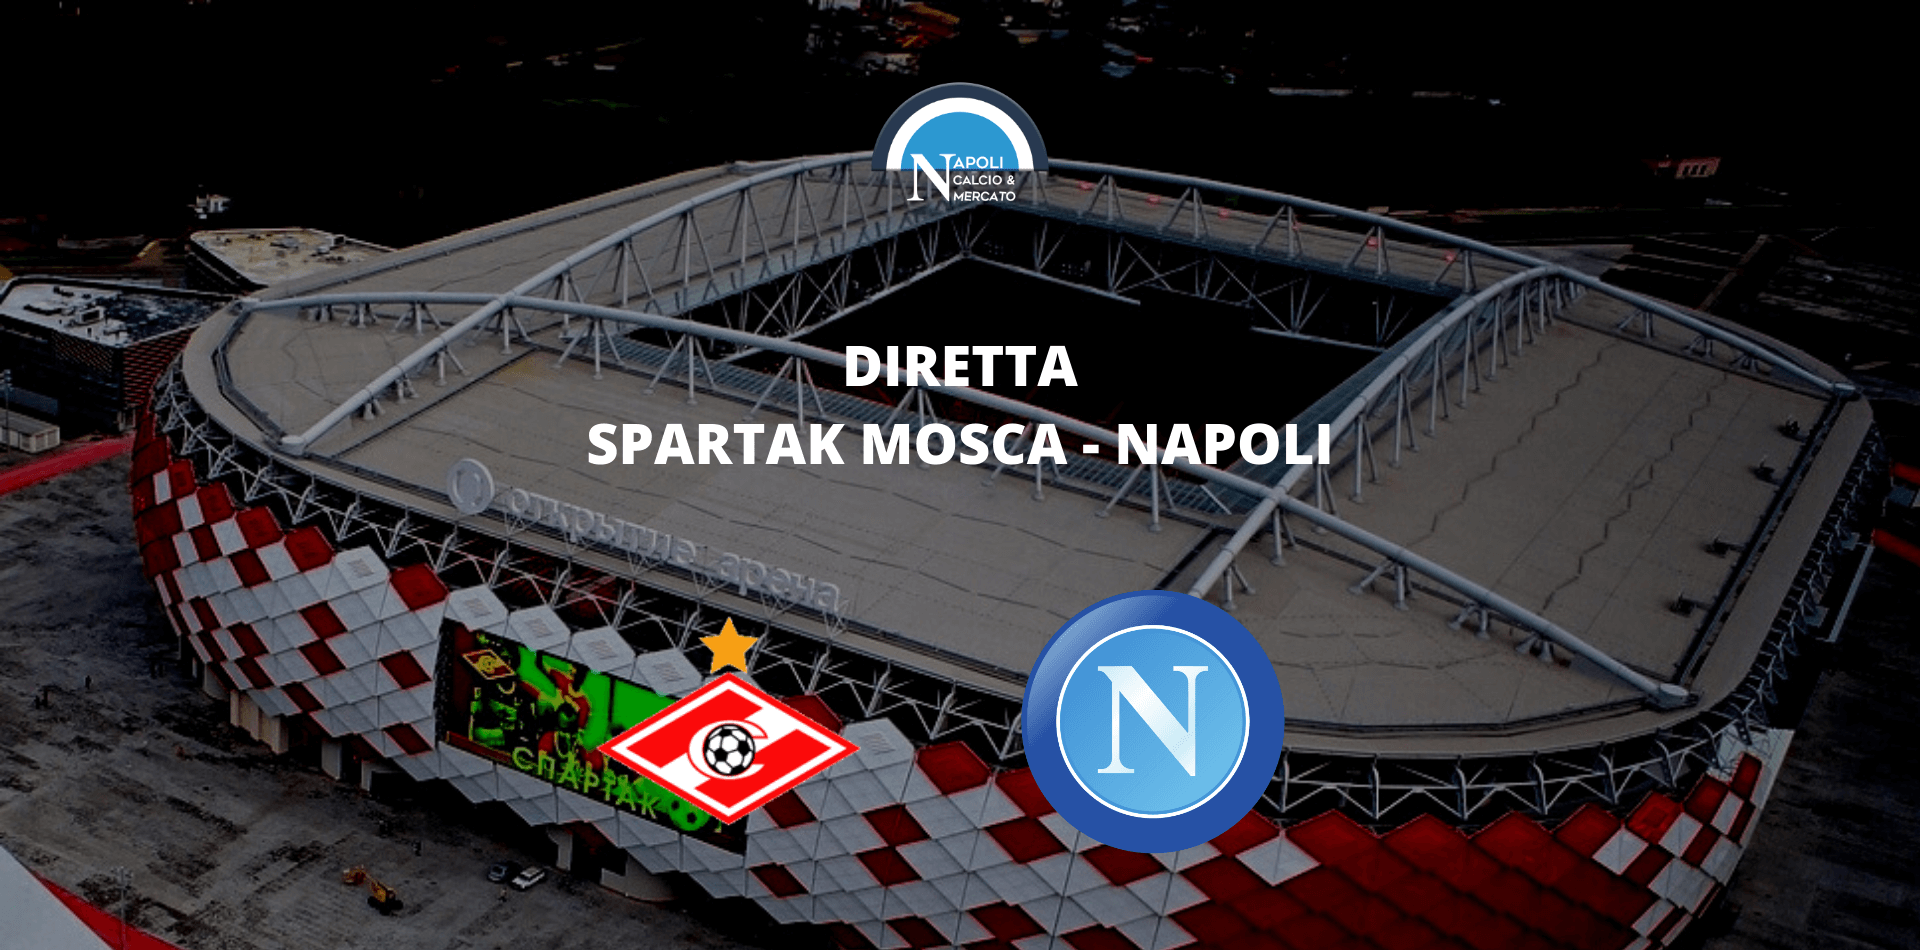 Diretta Spartak Mosca - Napoli